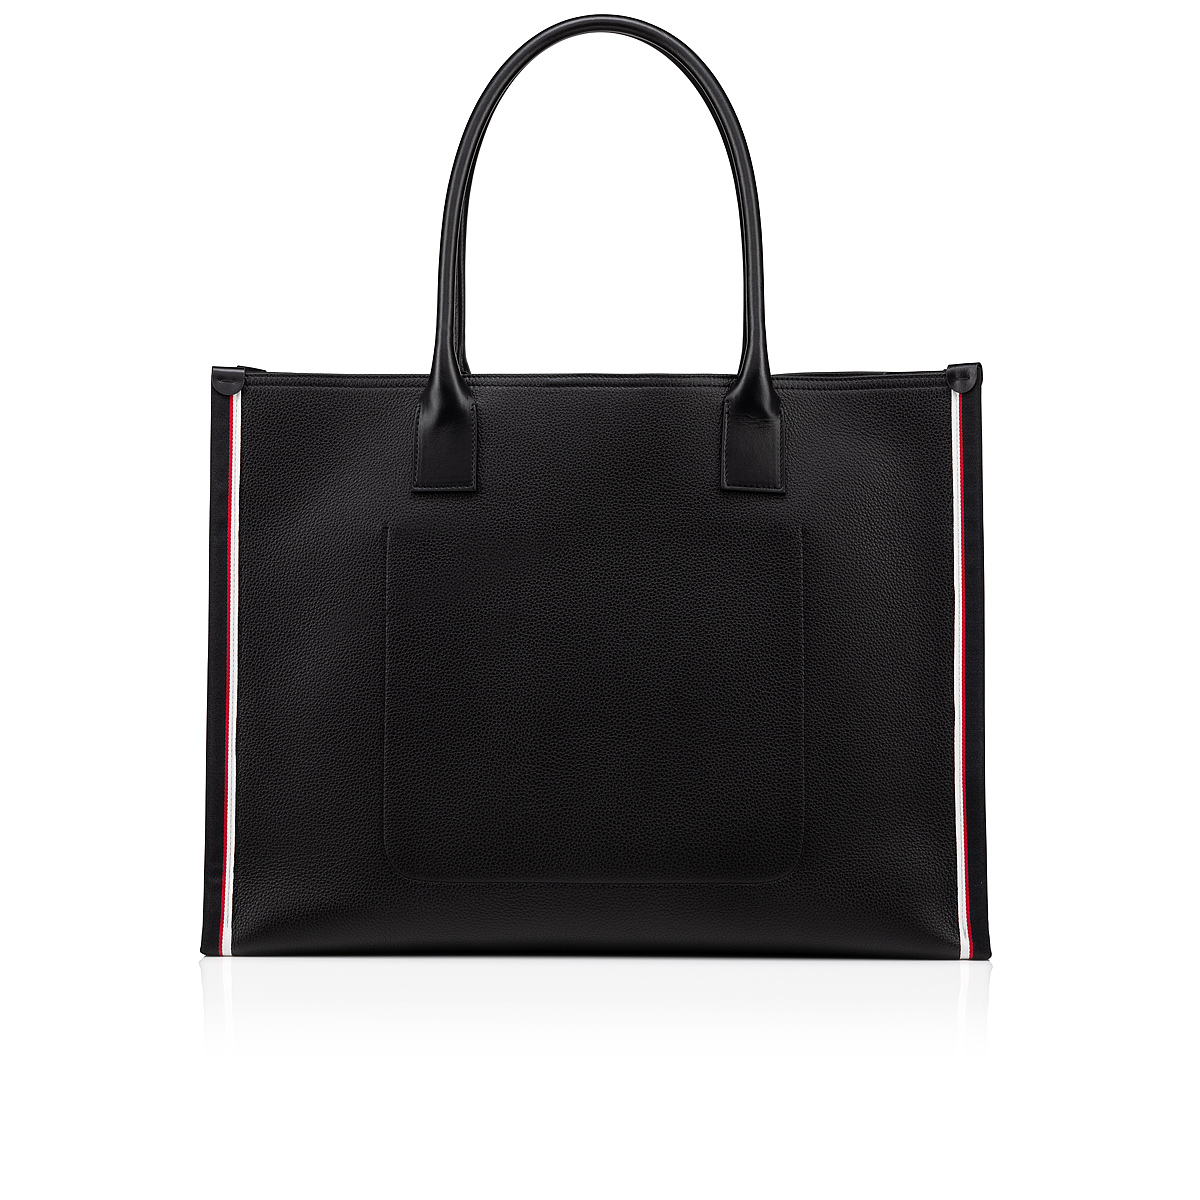 Nastroloubi XL - Tote bag - Grained calf leather - Black 